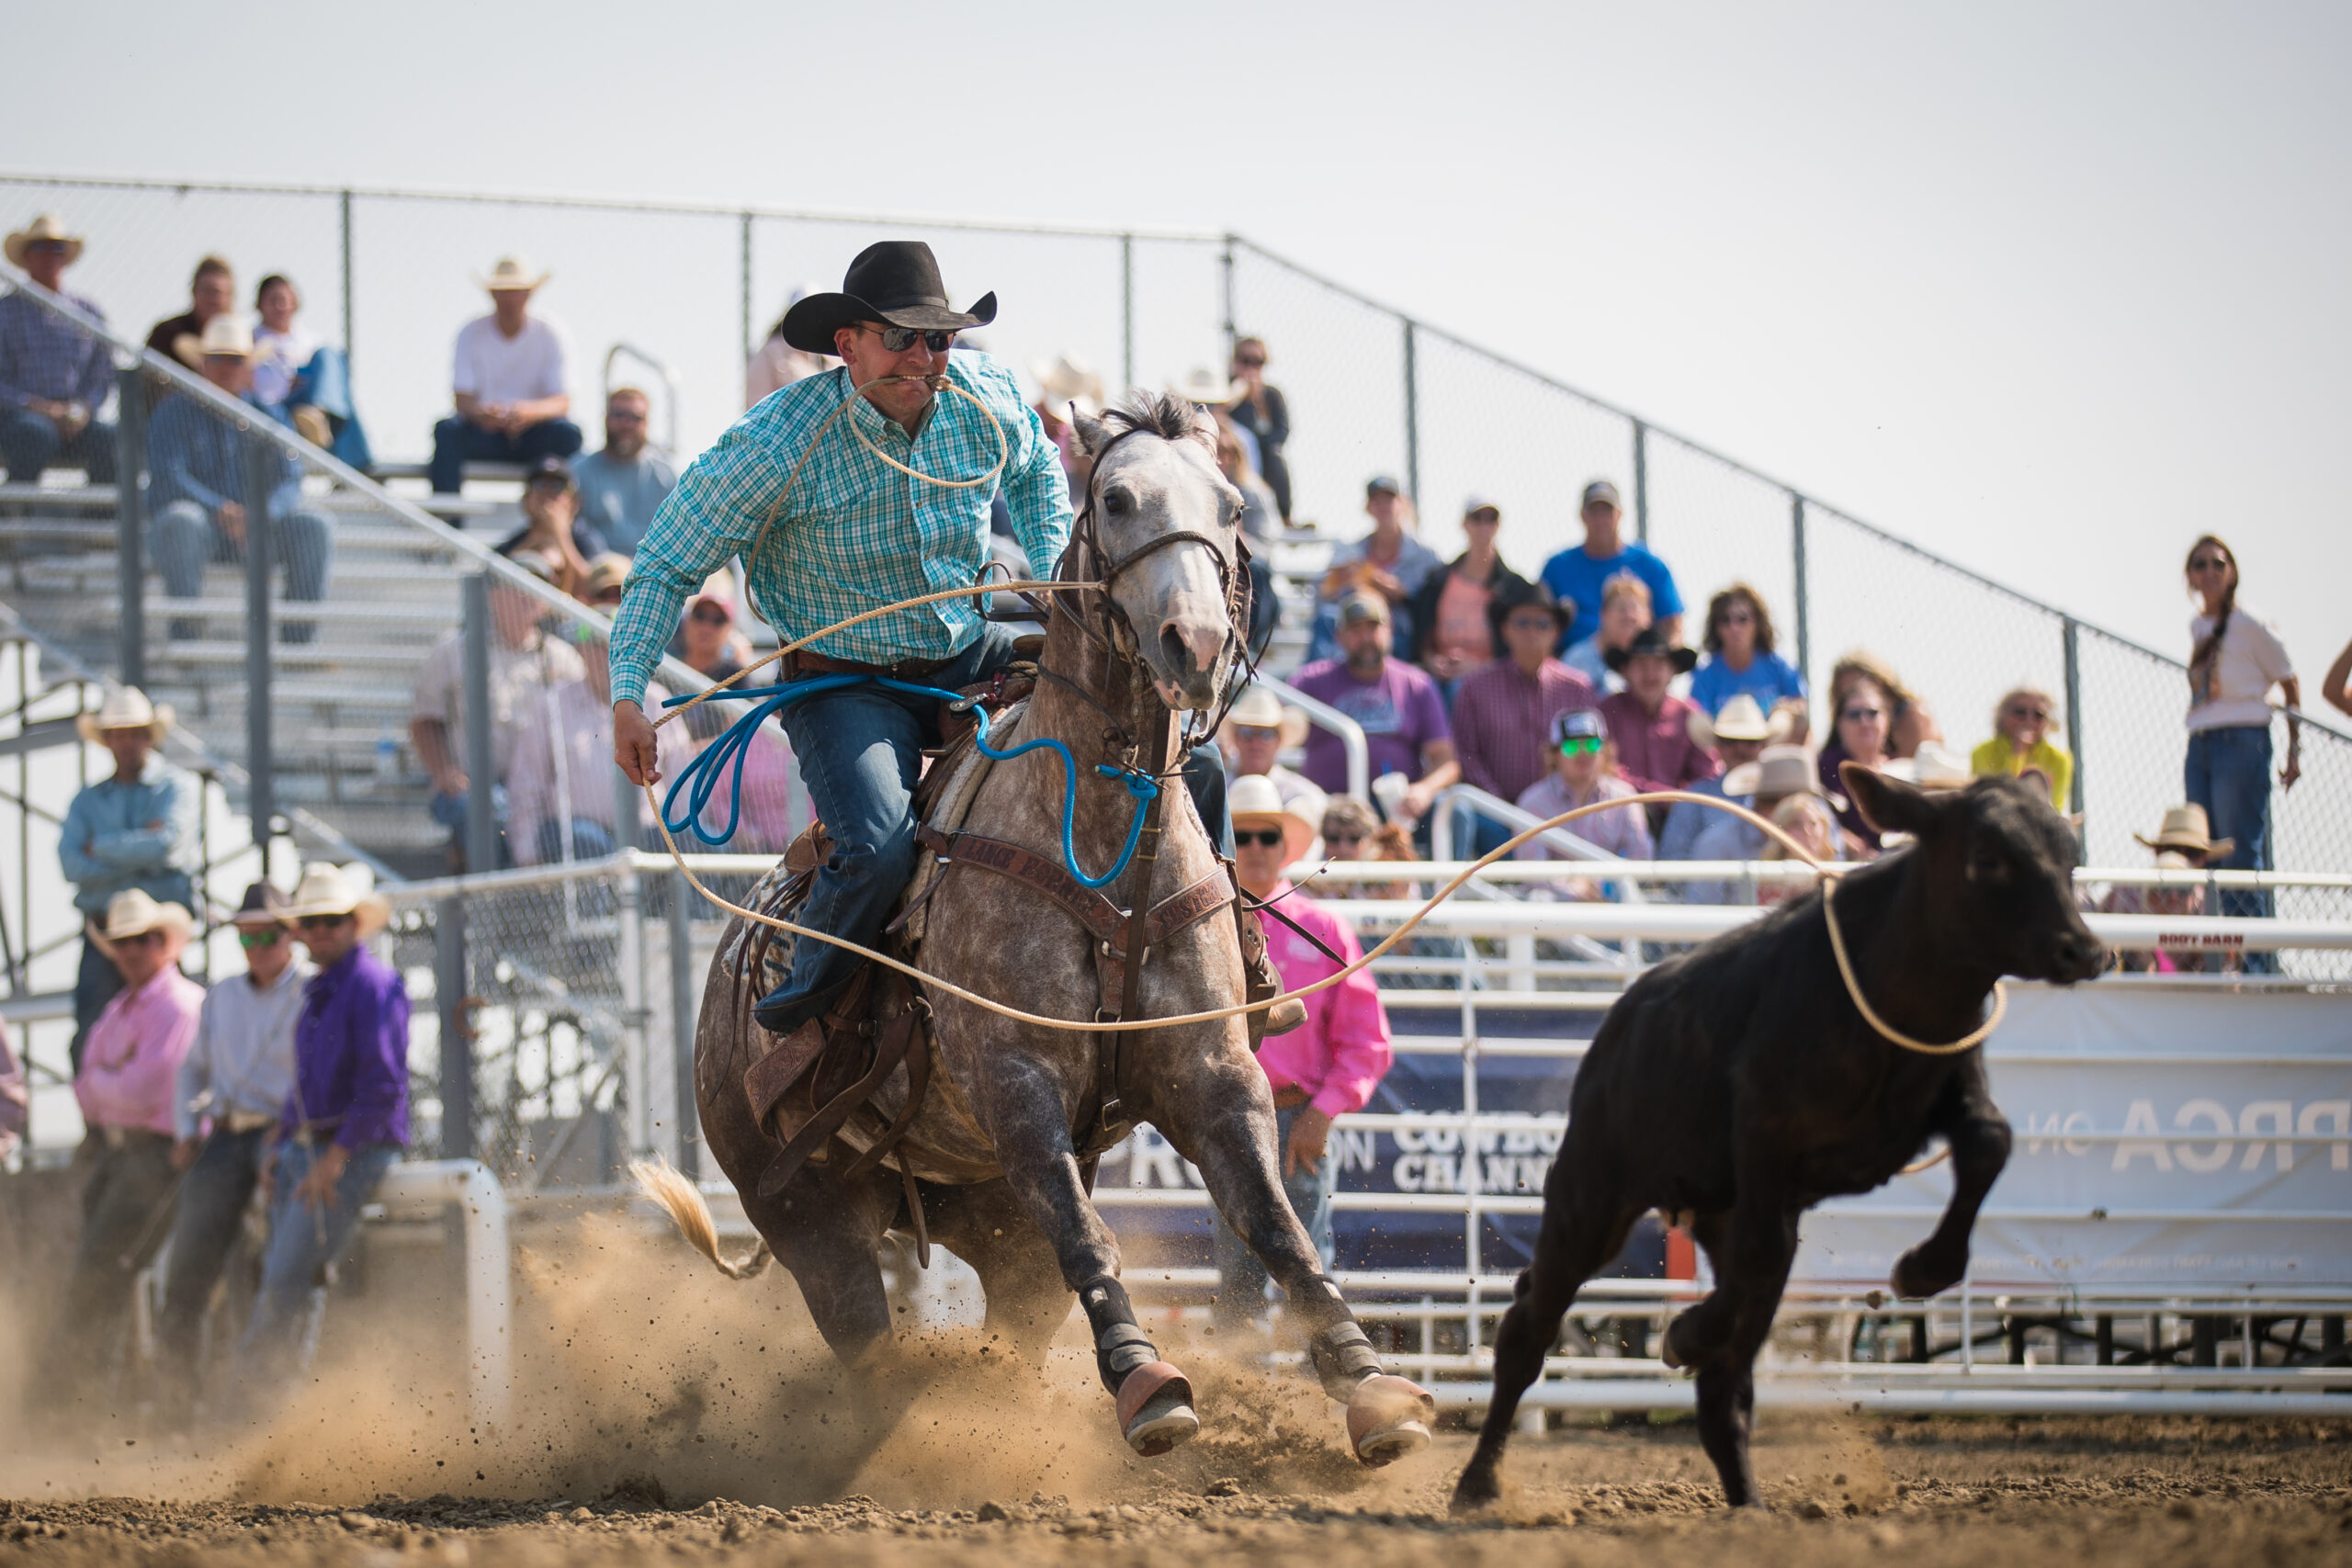 Jason Schaffer calf roping at the Fallon County Fair & Rodeo in Baker, Montana.